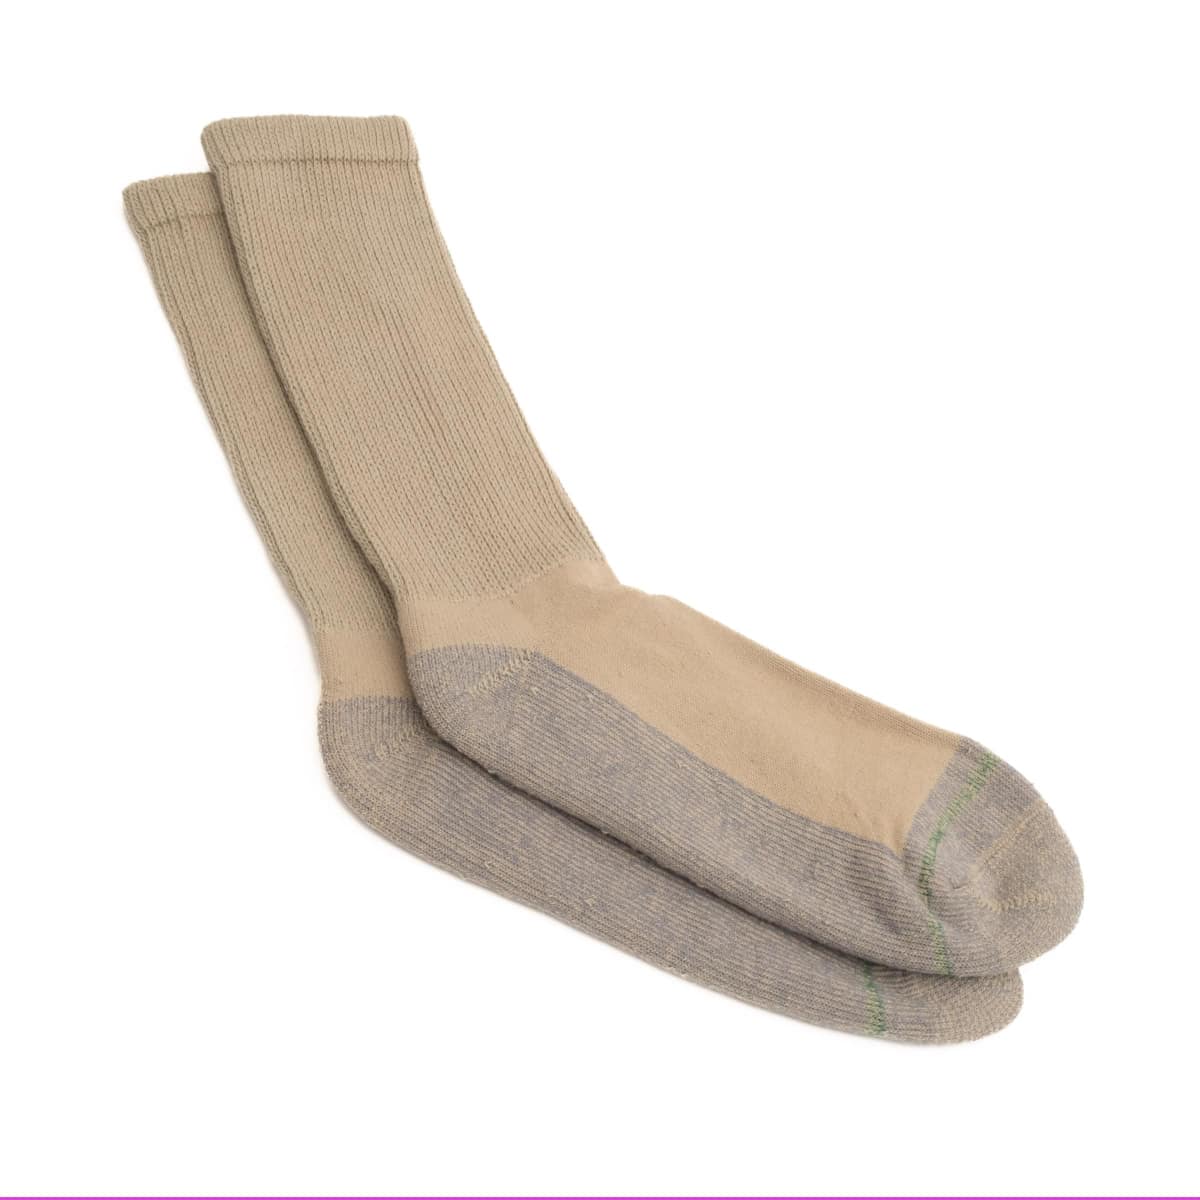 roomier tan crew socks - looser mid calf socks